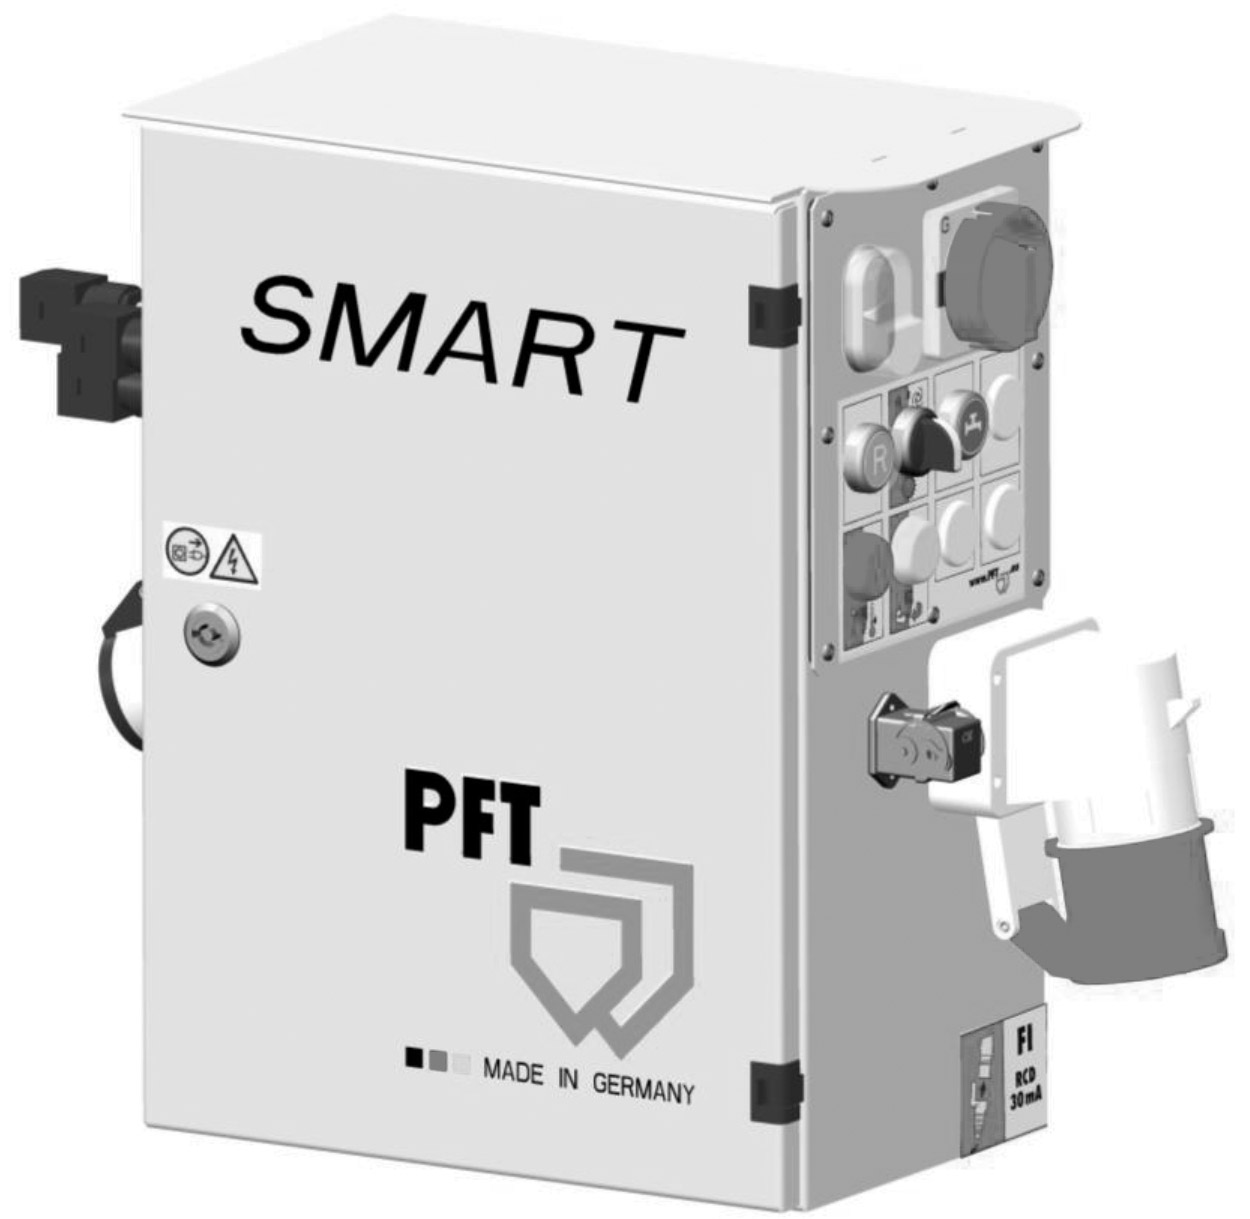 Электрооборудование PFT G4 X smart